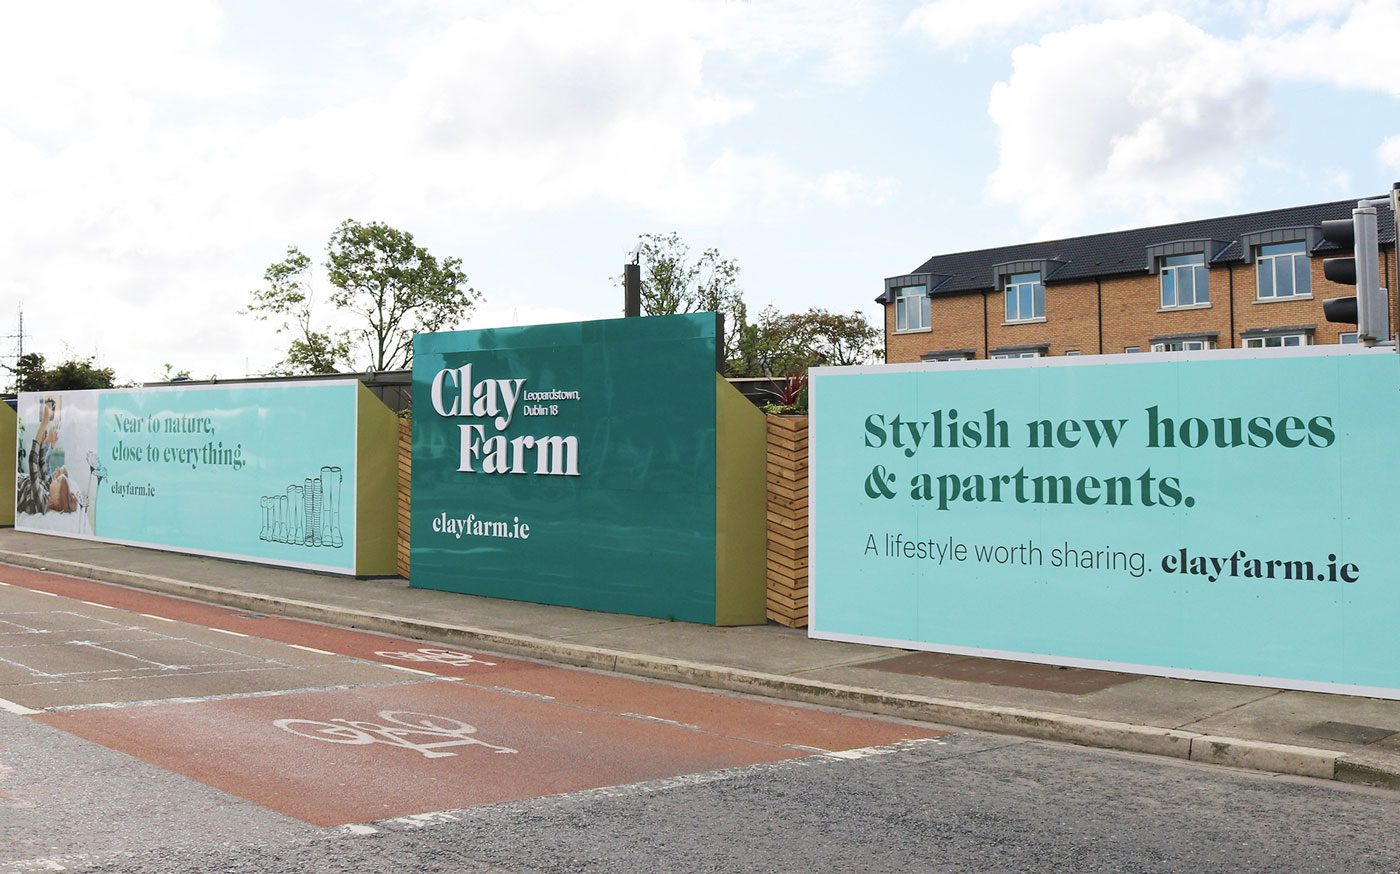 On-street marketing on billboard-style display for Clay Farm